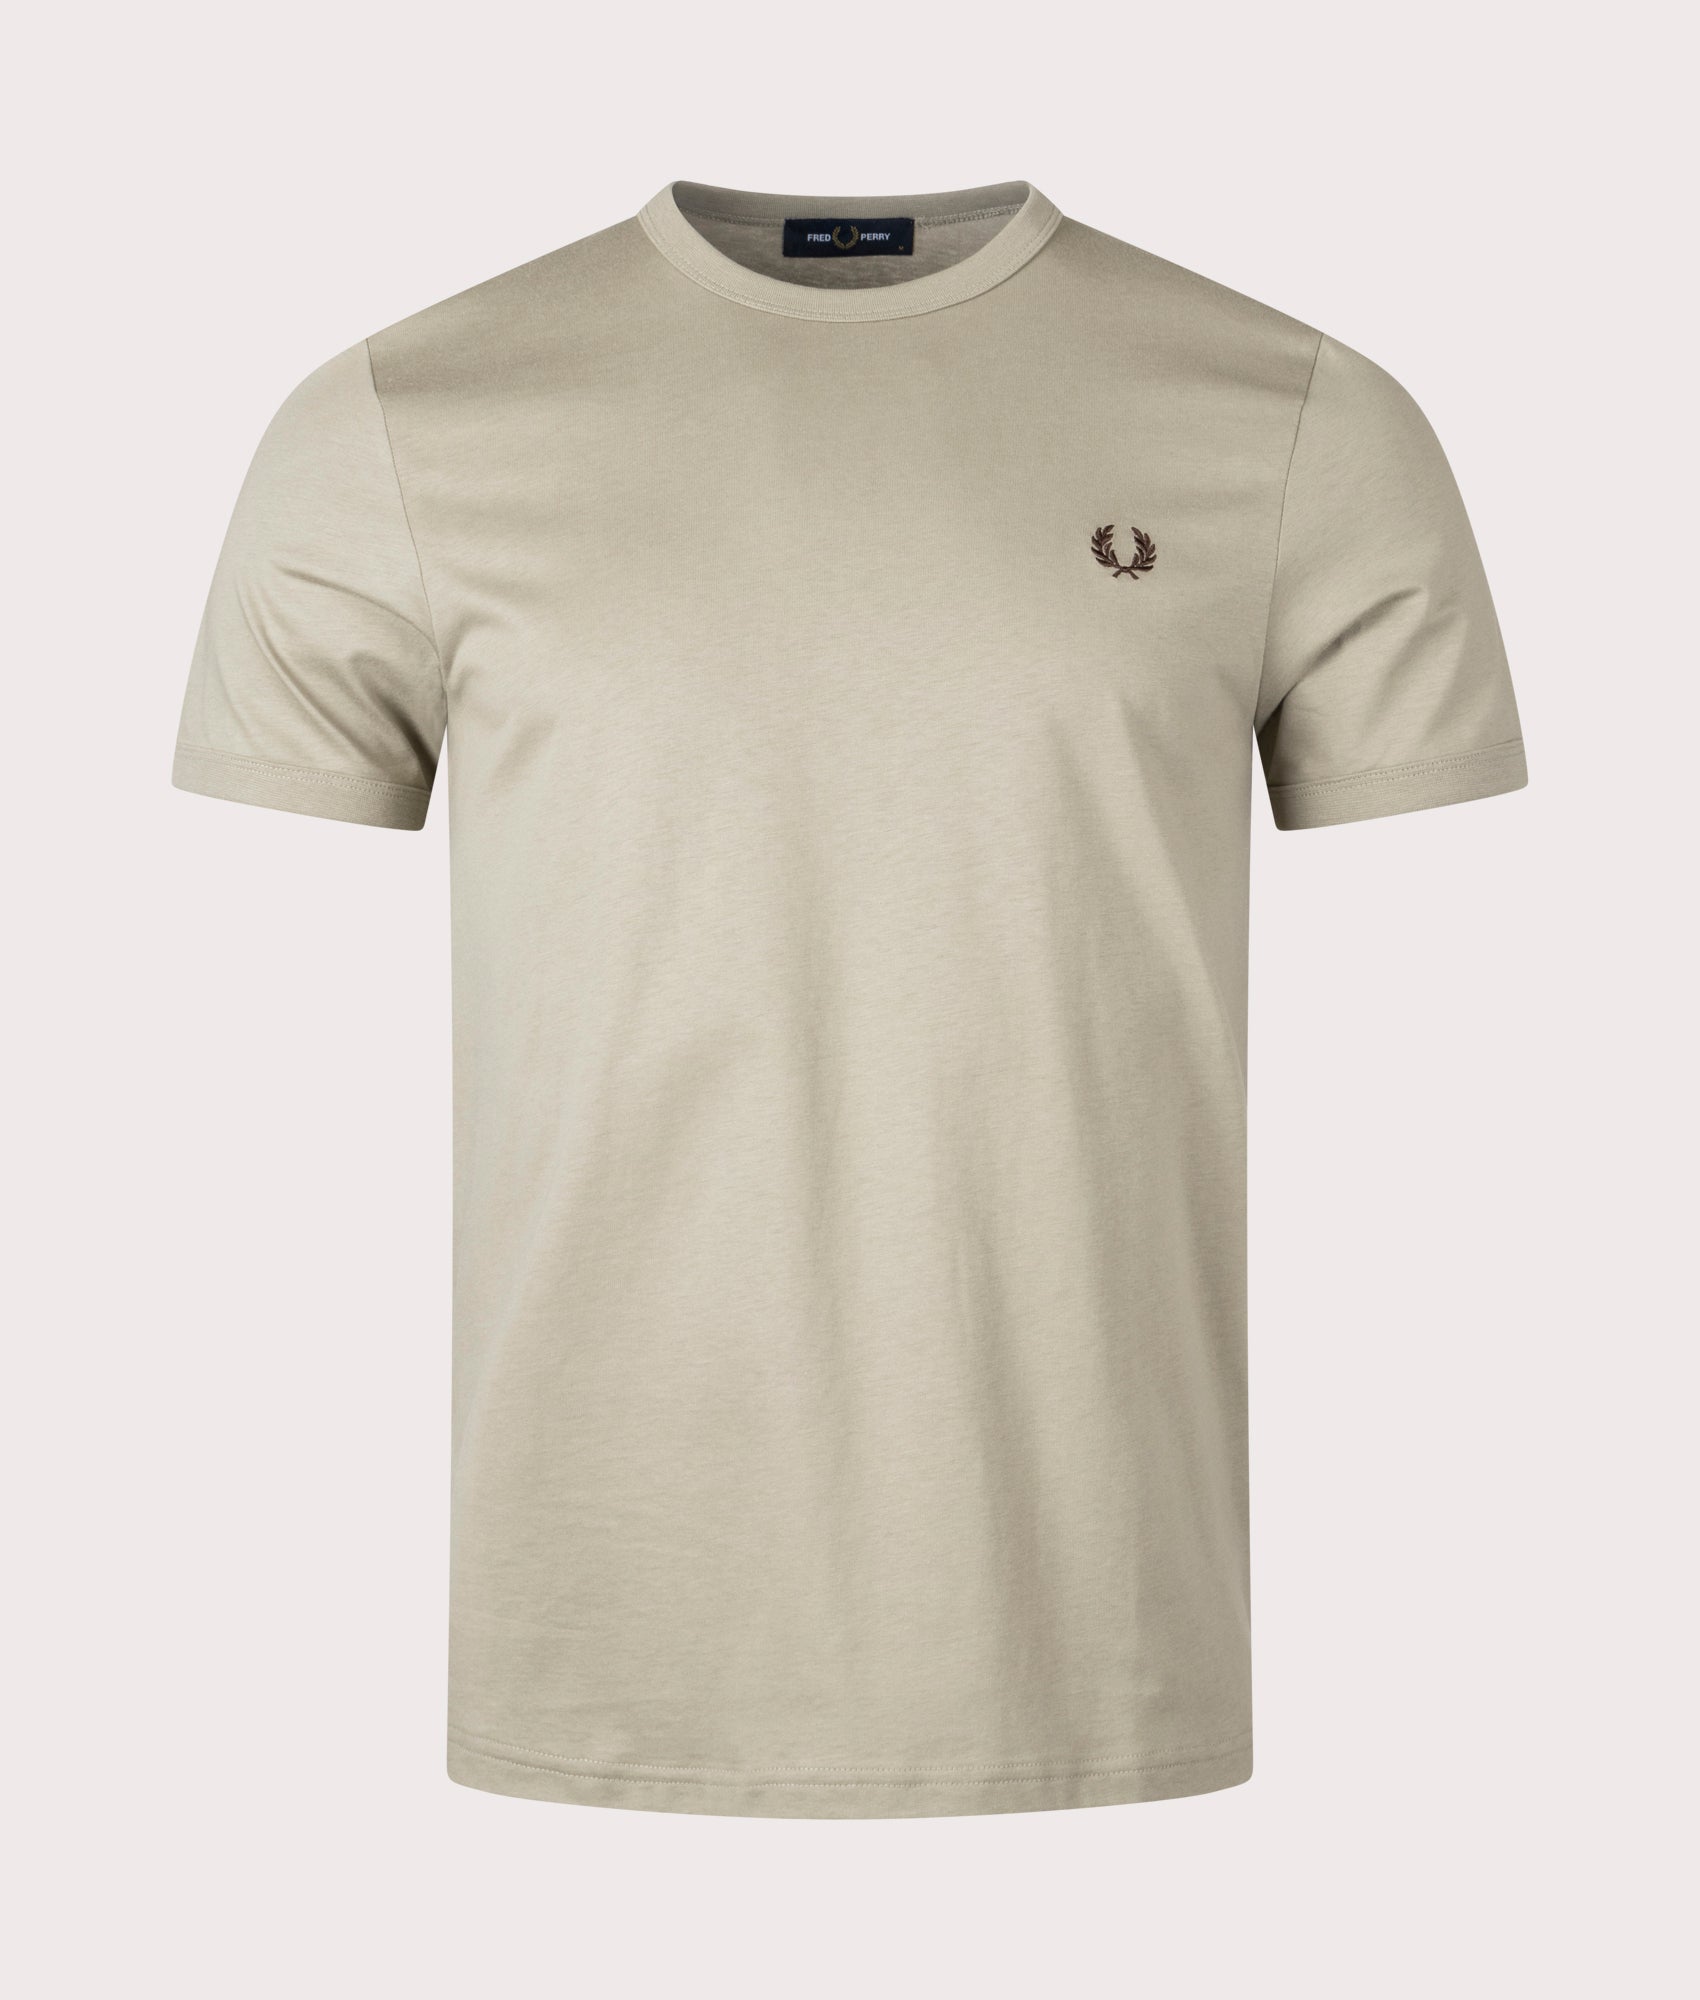 Fred Perry Mens Ringer T-Shirt - Colour: U84 Warm Grey/Carrington Road Brick - Size: XXL